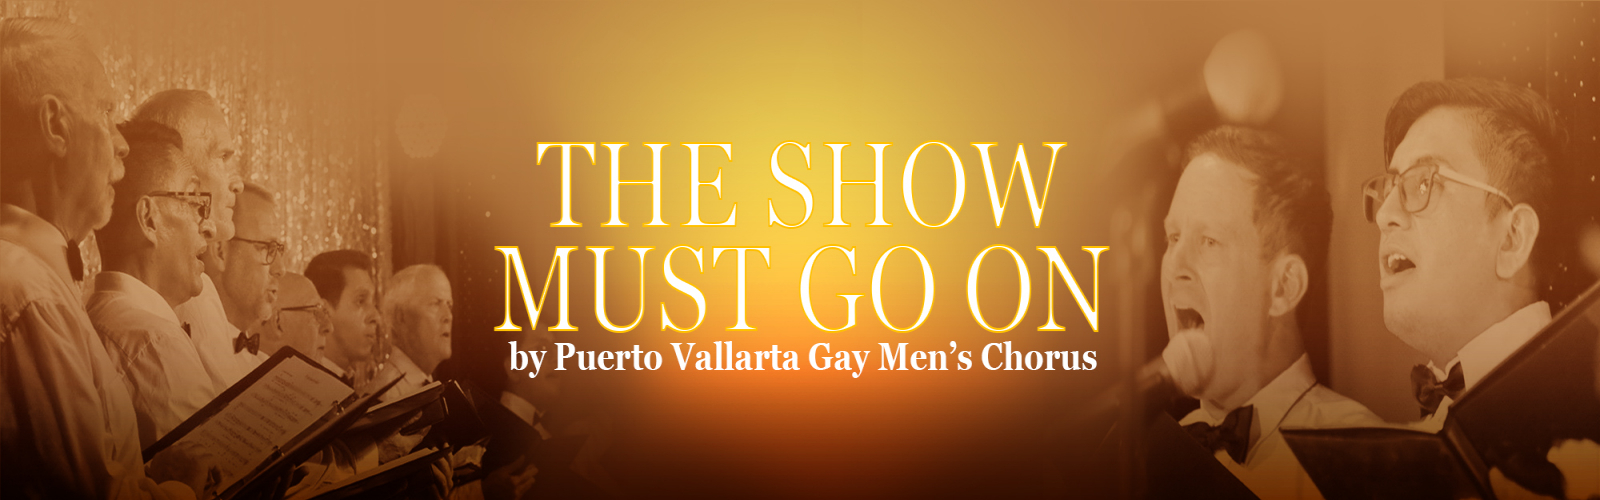 THE SHOW MUST GO ON - featuring the Puerto Vallarta Gay Men's Chorus